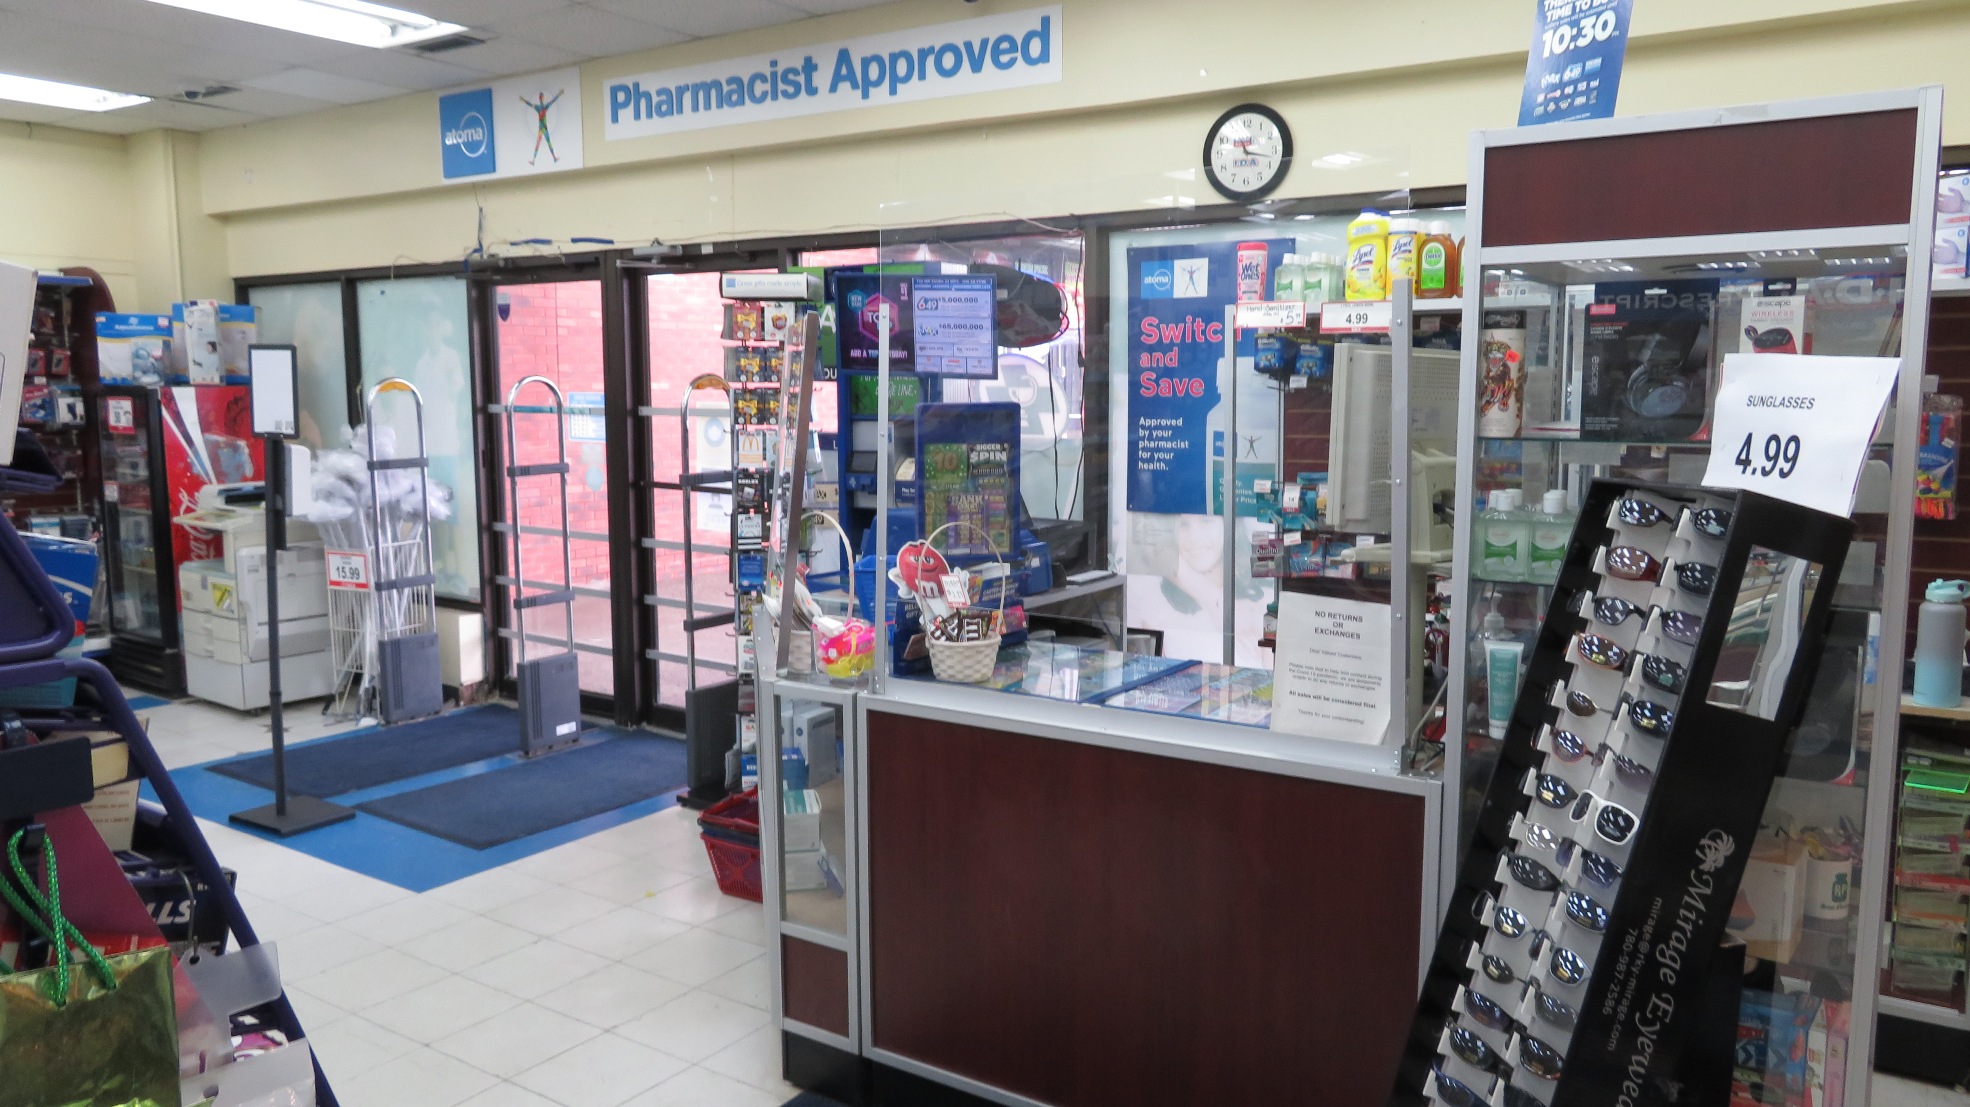 Charolais IDA Pharmacy